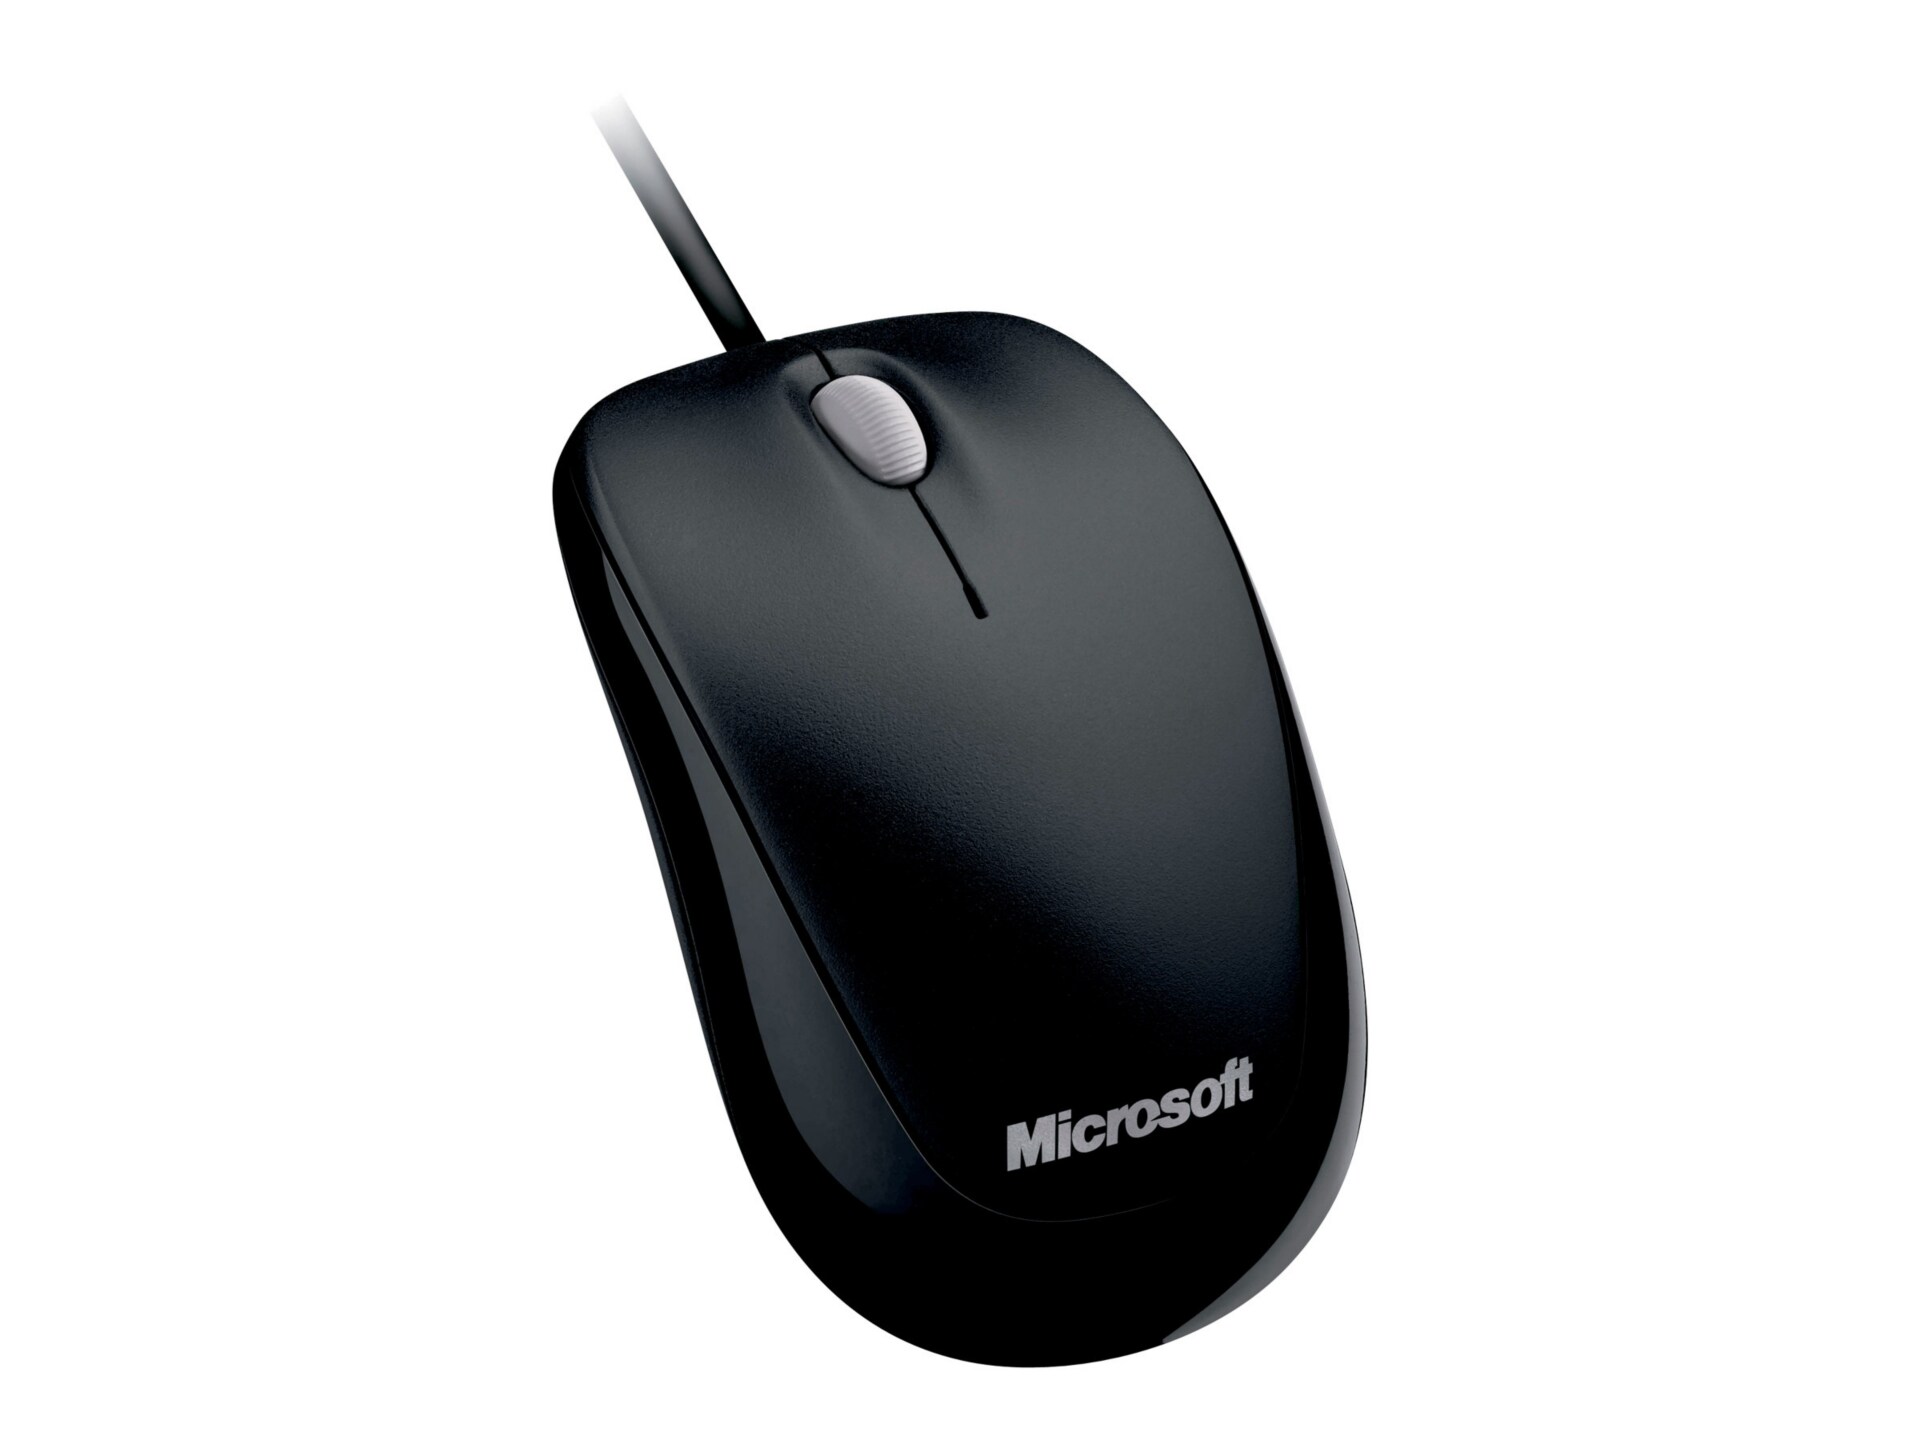 Microsoft Compact Optical Mouse 500 - mouse - USB - black